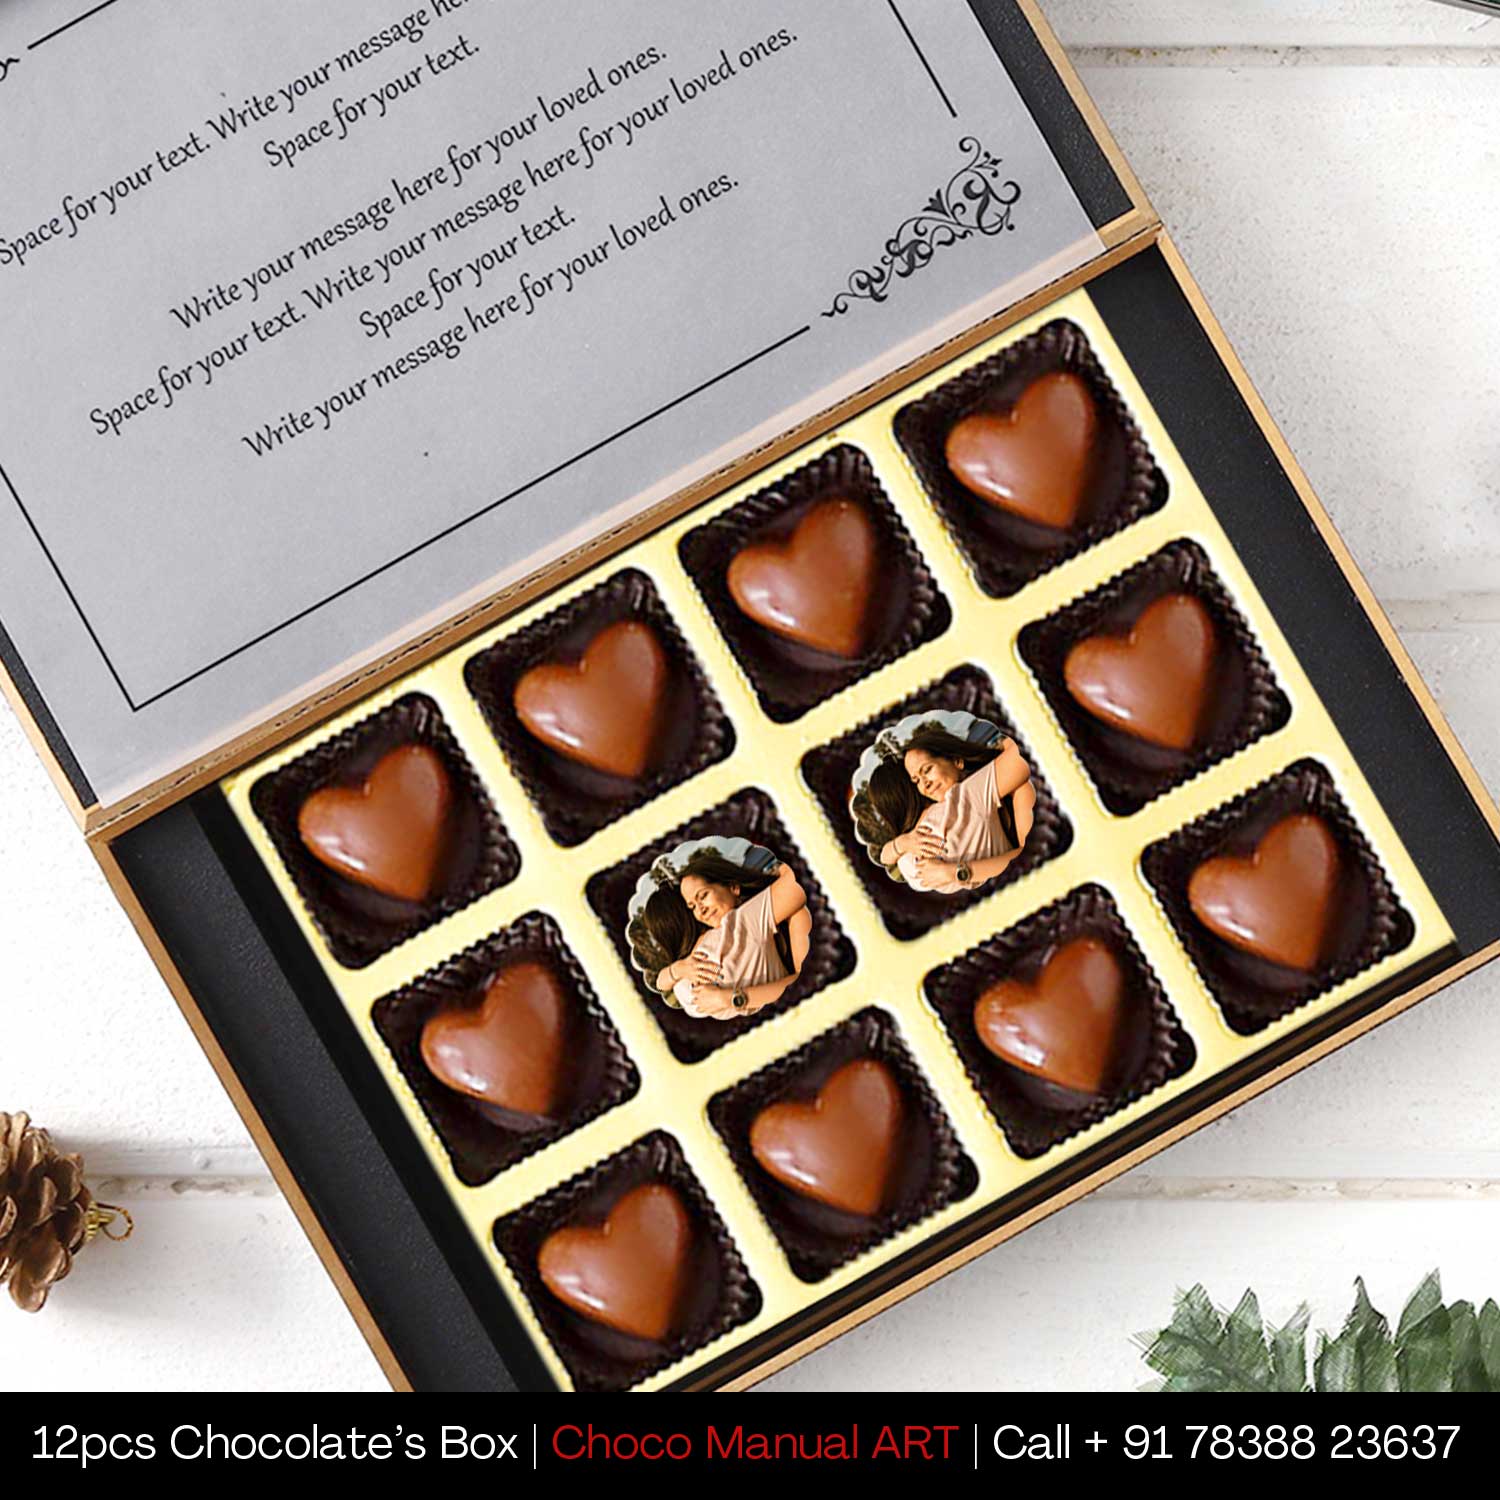 Hug Day Heart Shape chocolates Special gift